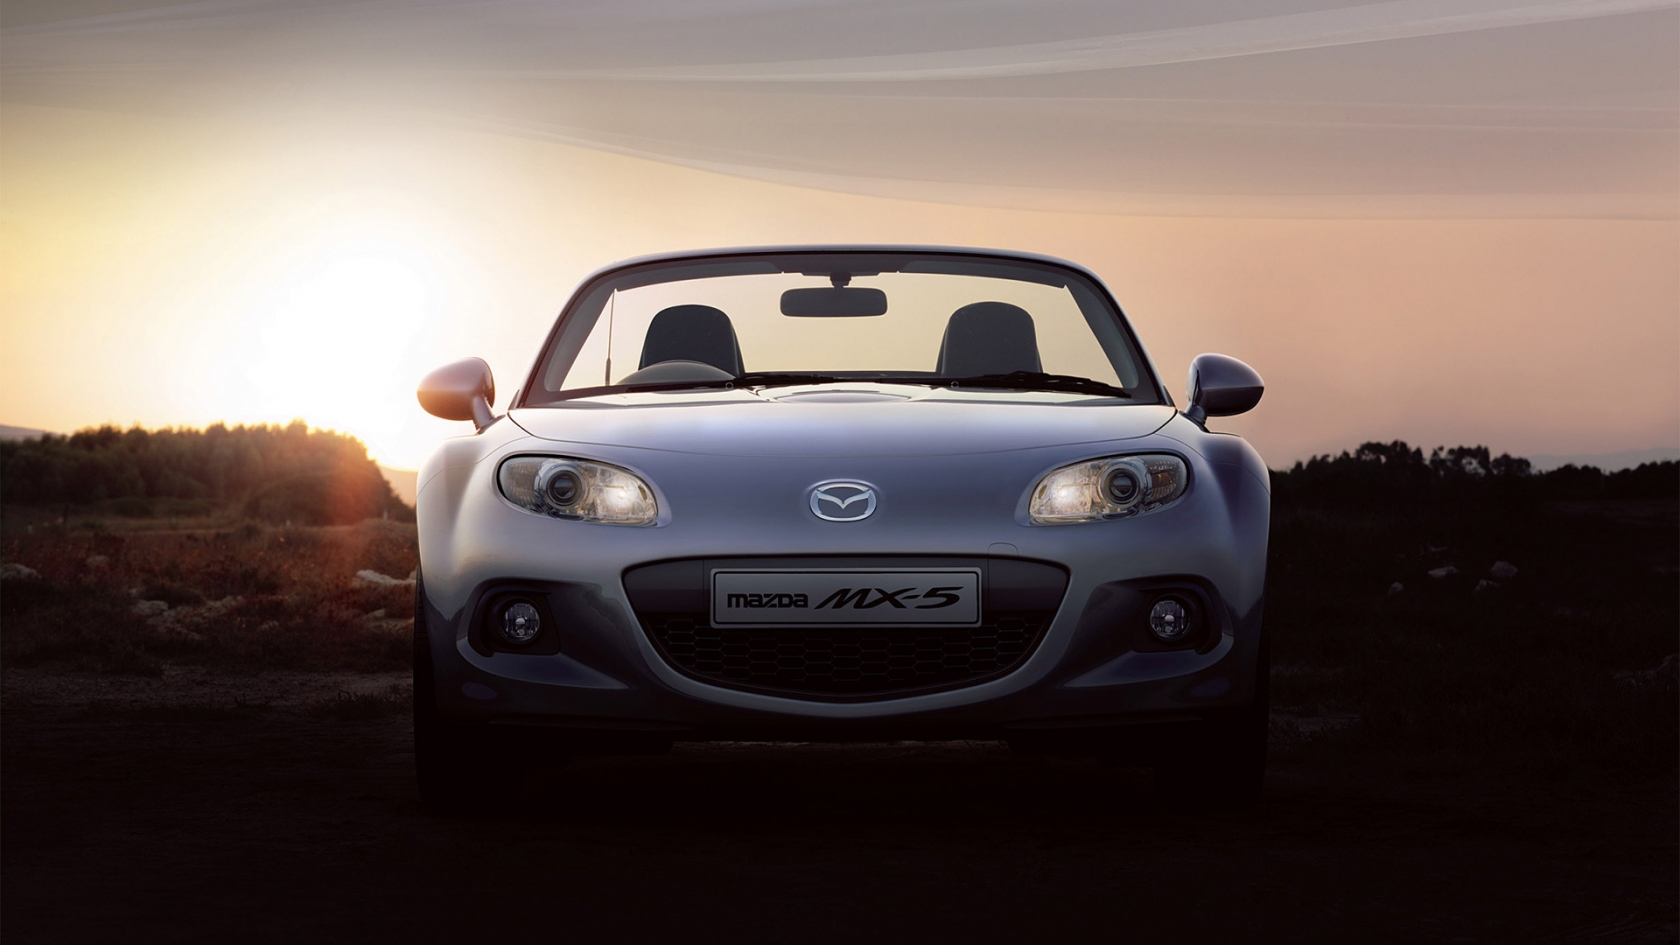 2013 Mazda MX 5 Roadster for 1680 x 945 HDTV resolution